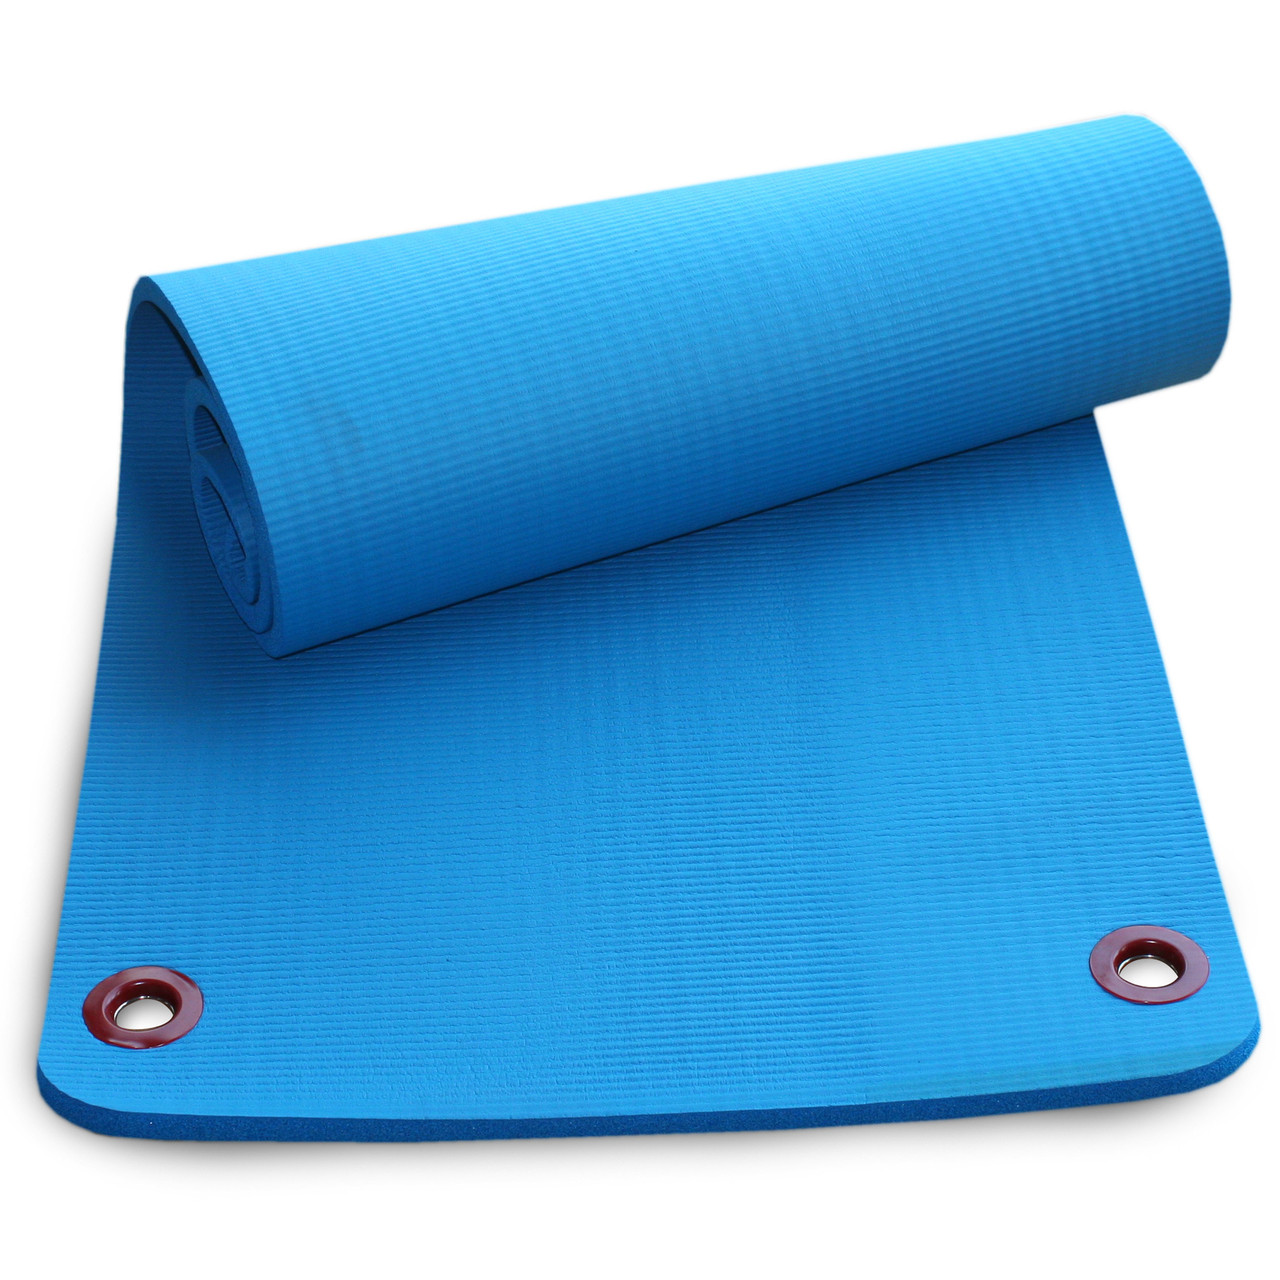 Deluxe Pilates Mat (midnight blue)